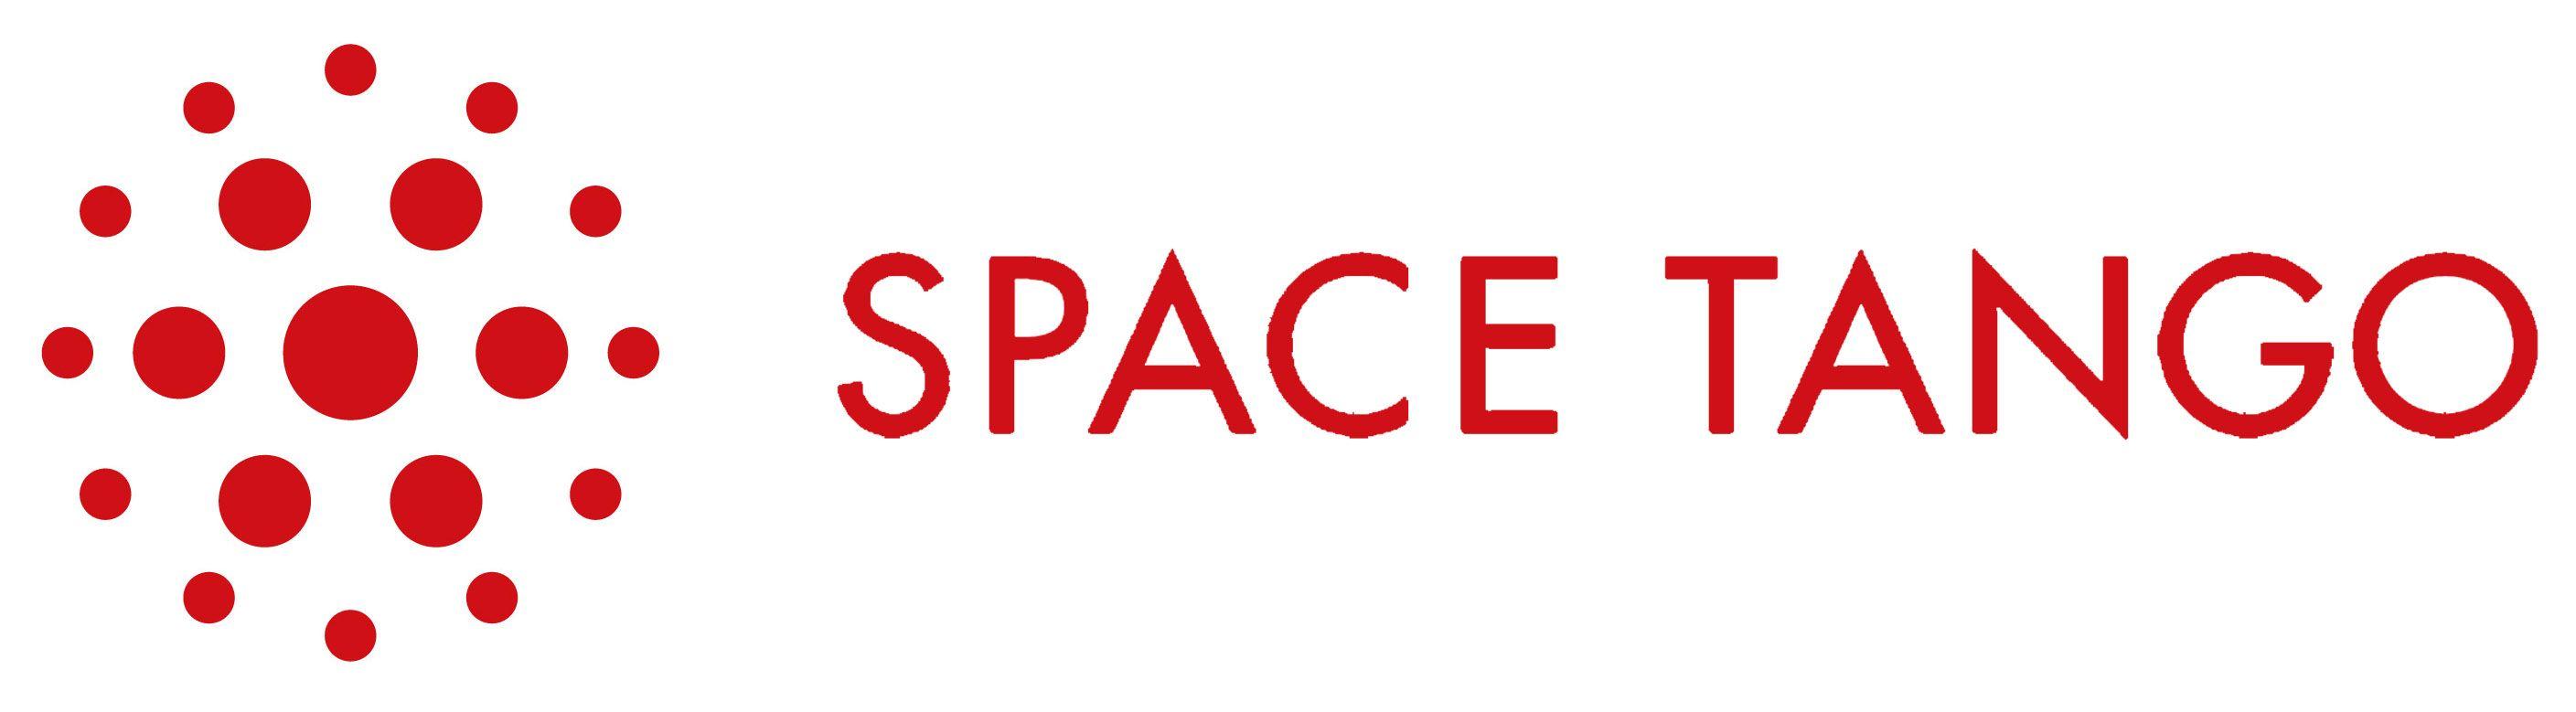 Tango Logo - Space Tango